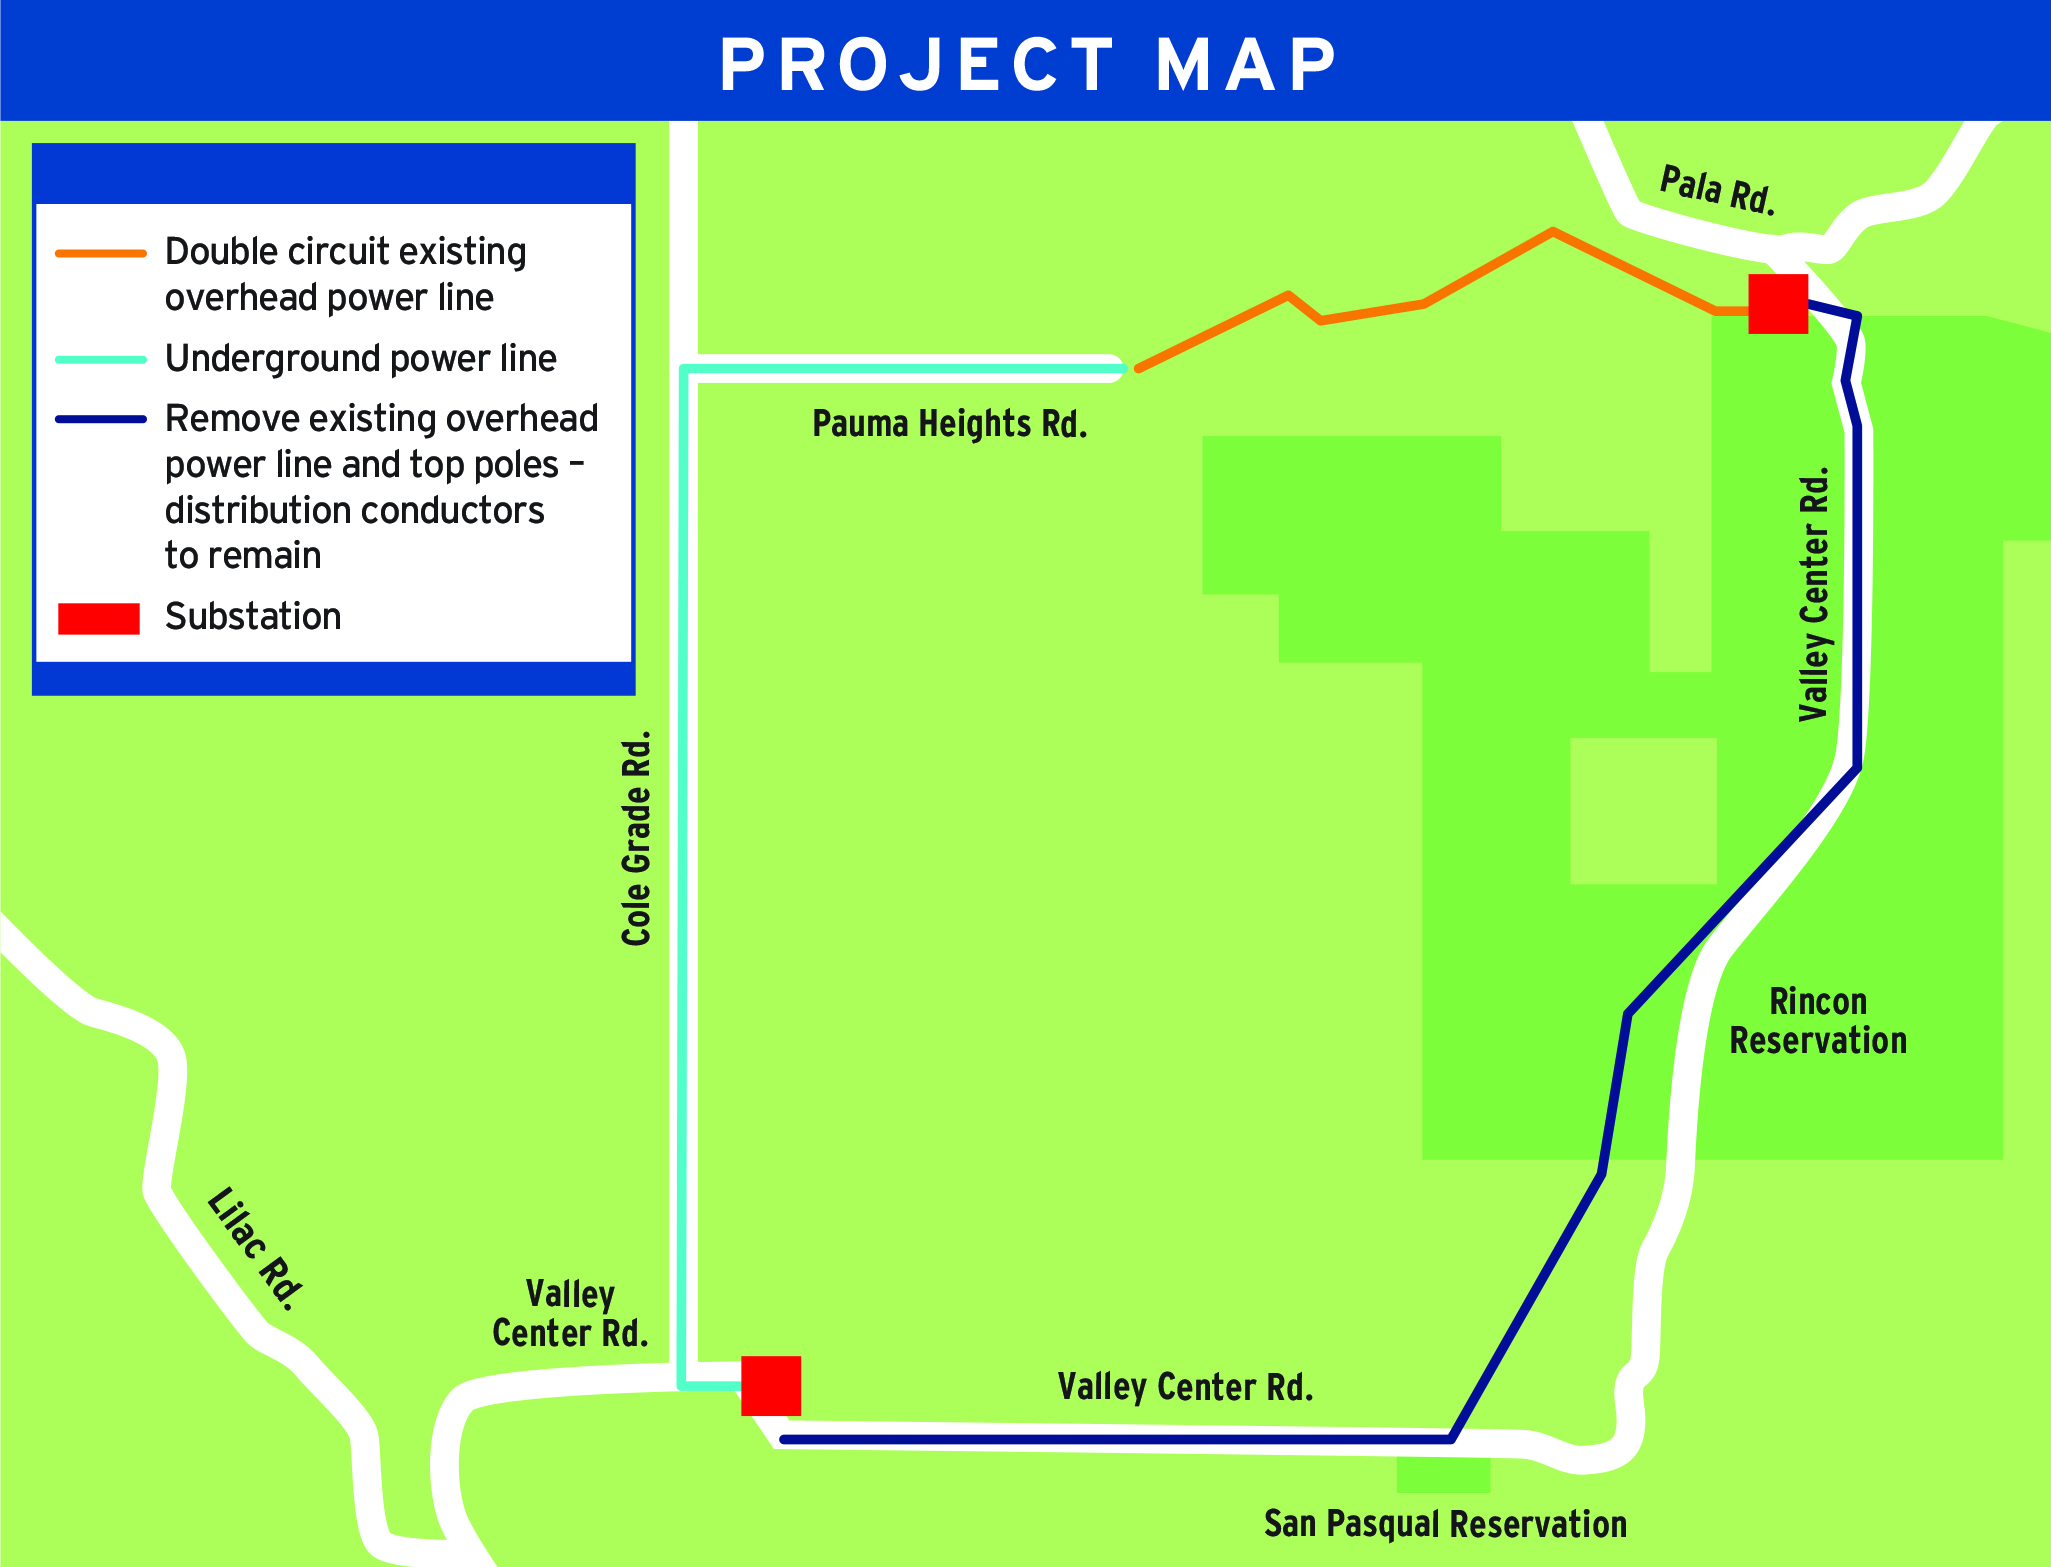 La Jolla Undergrounding Project Map